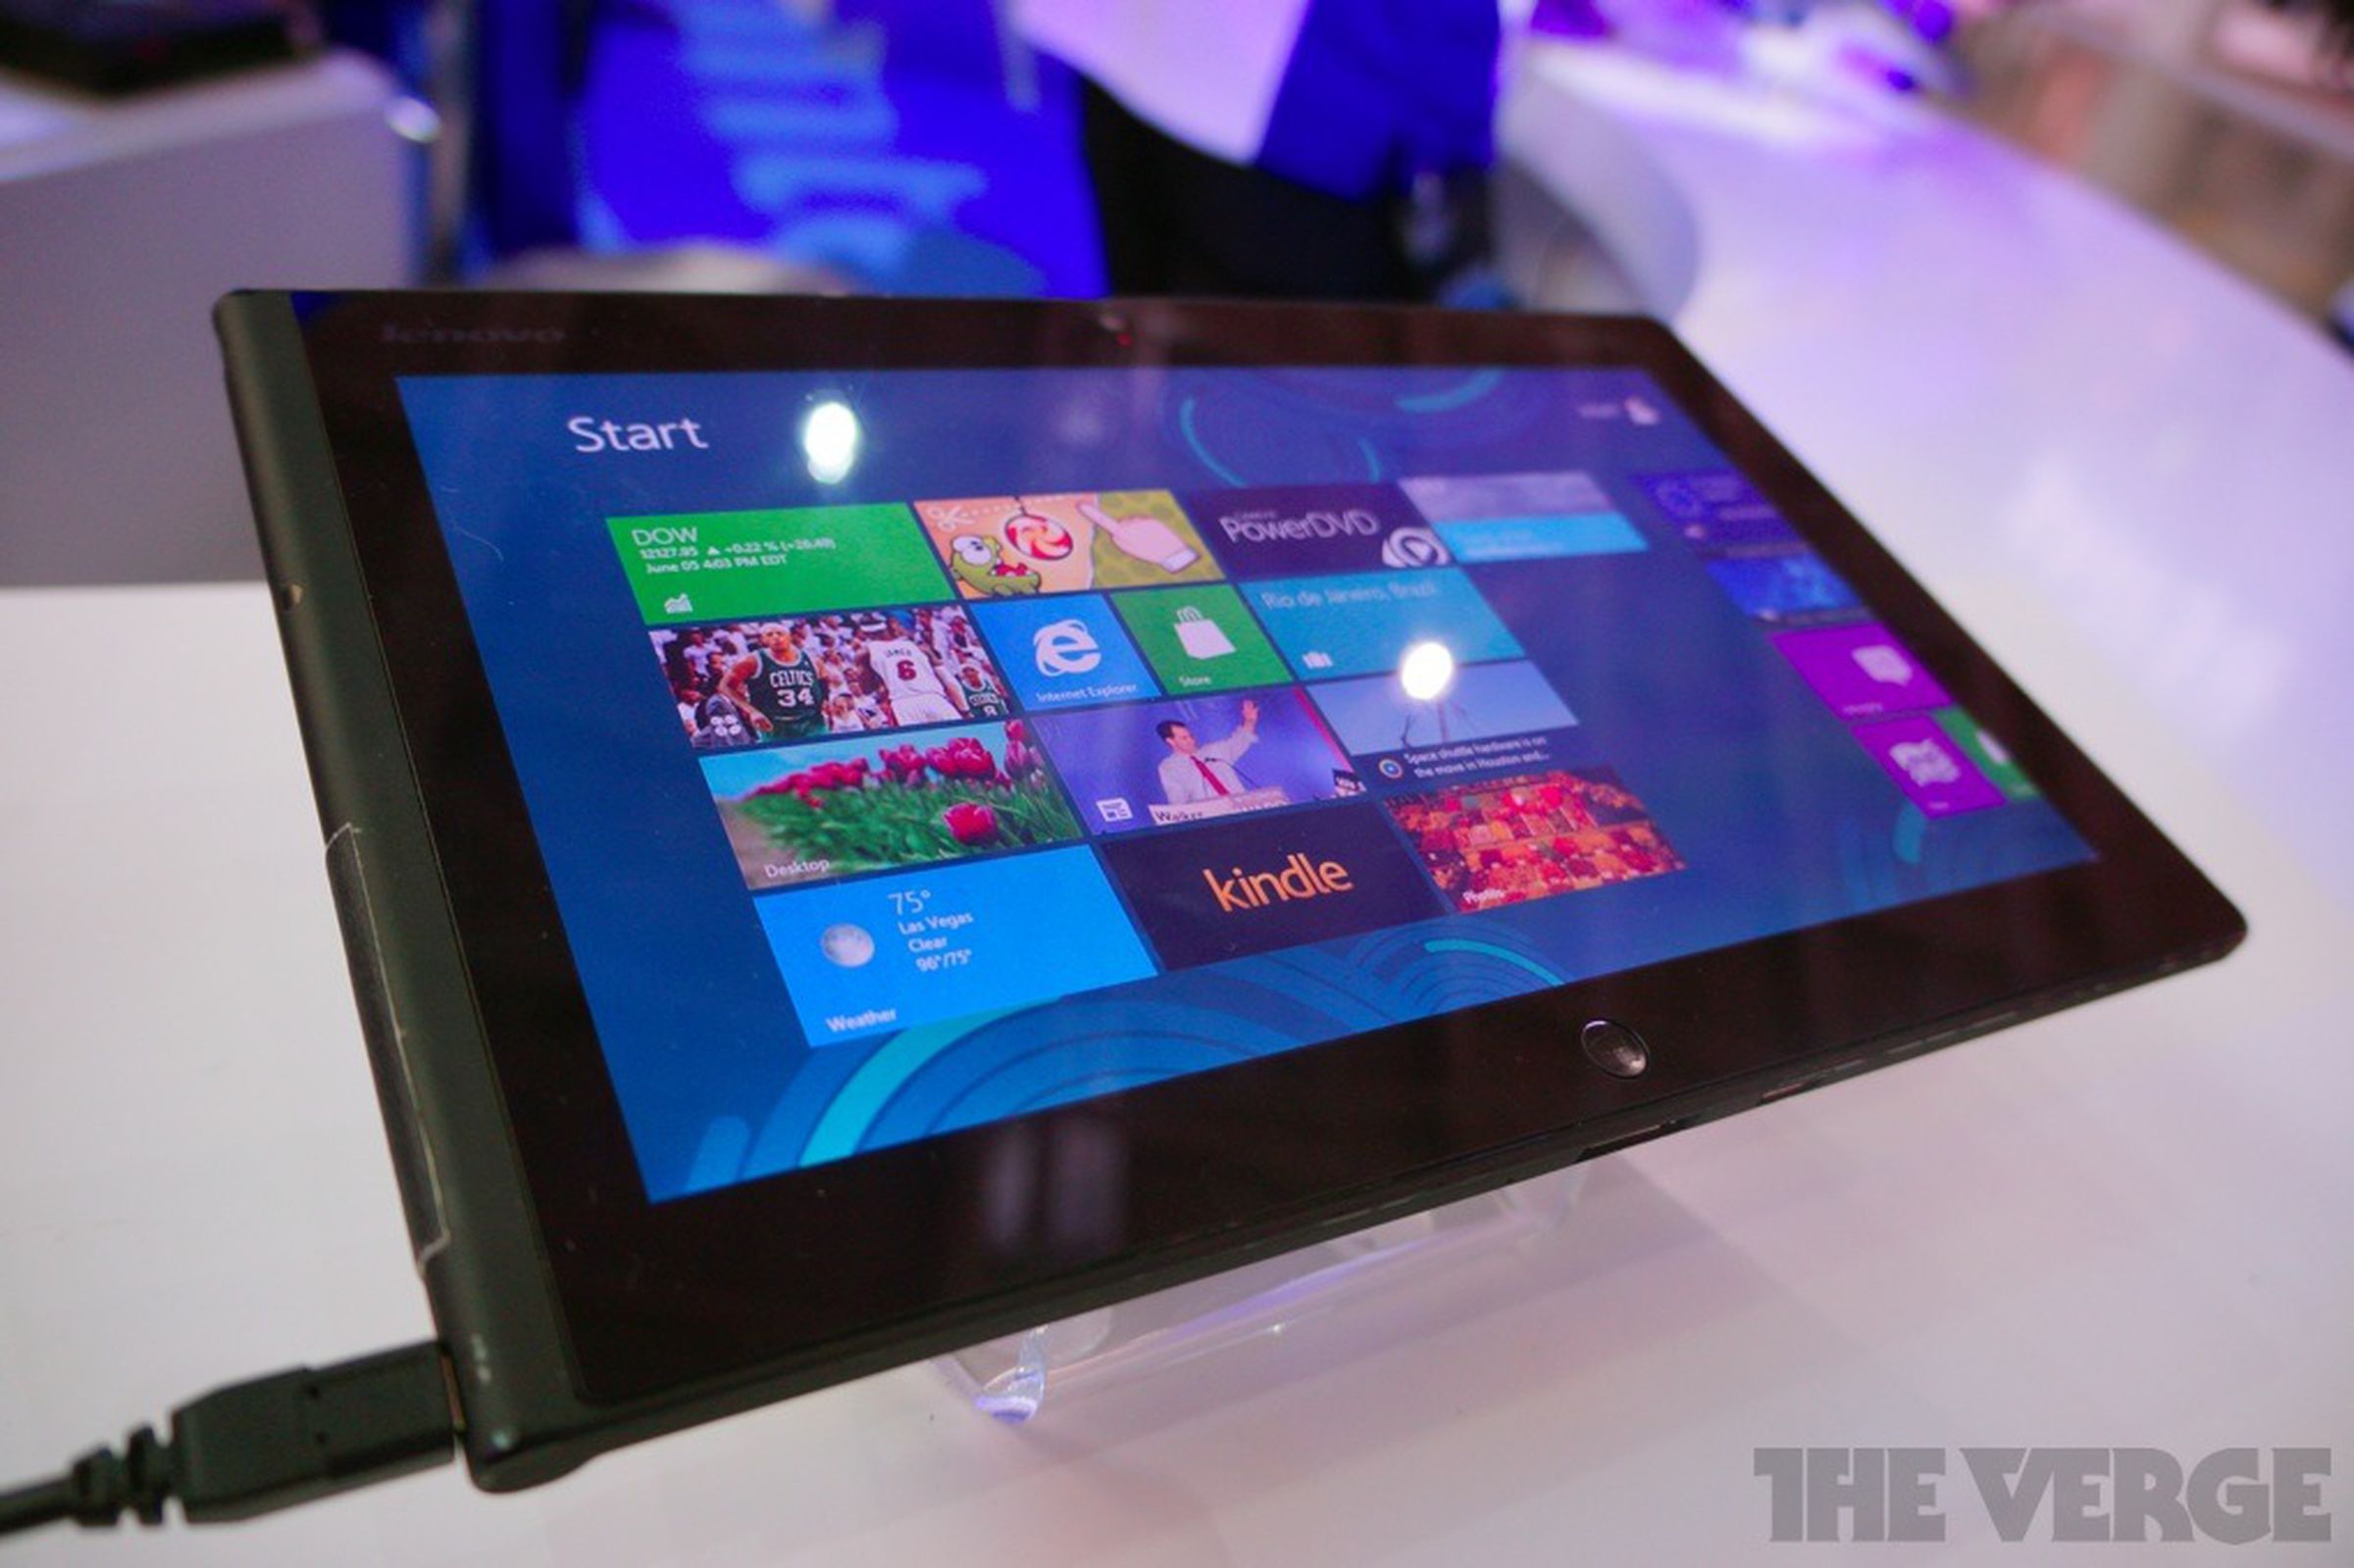 Lenovo ThinkPad Windows 8 tablet prototype photos